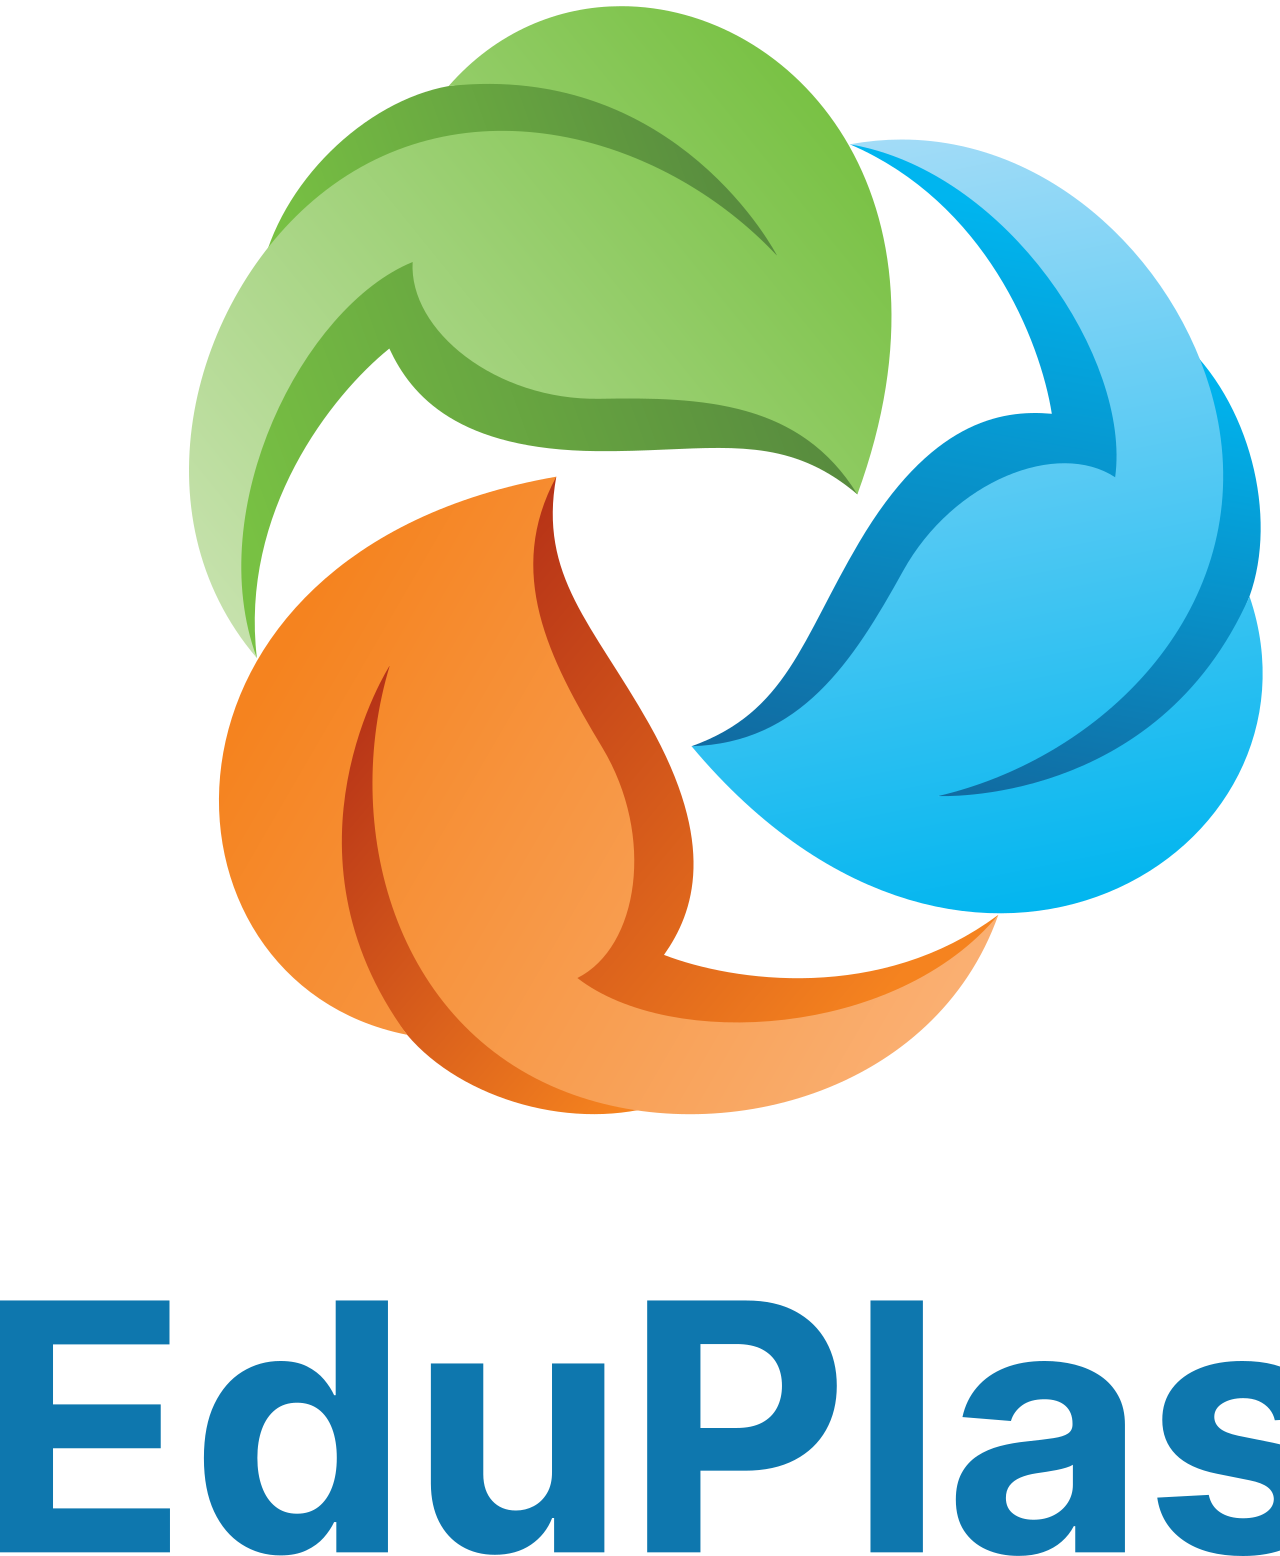 EduPlast's logo